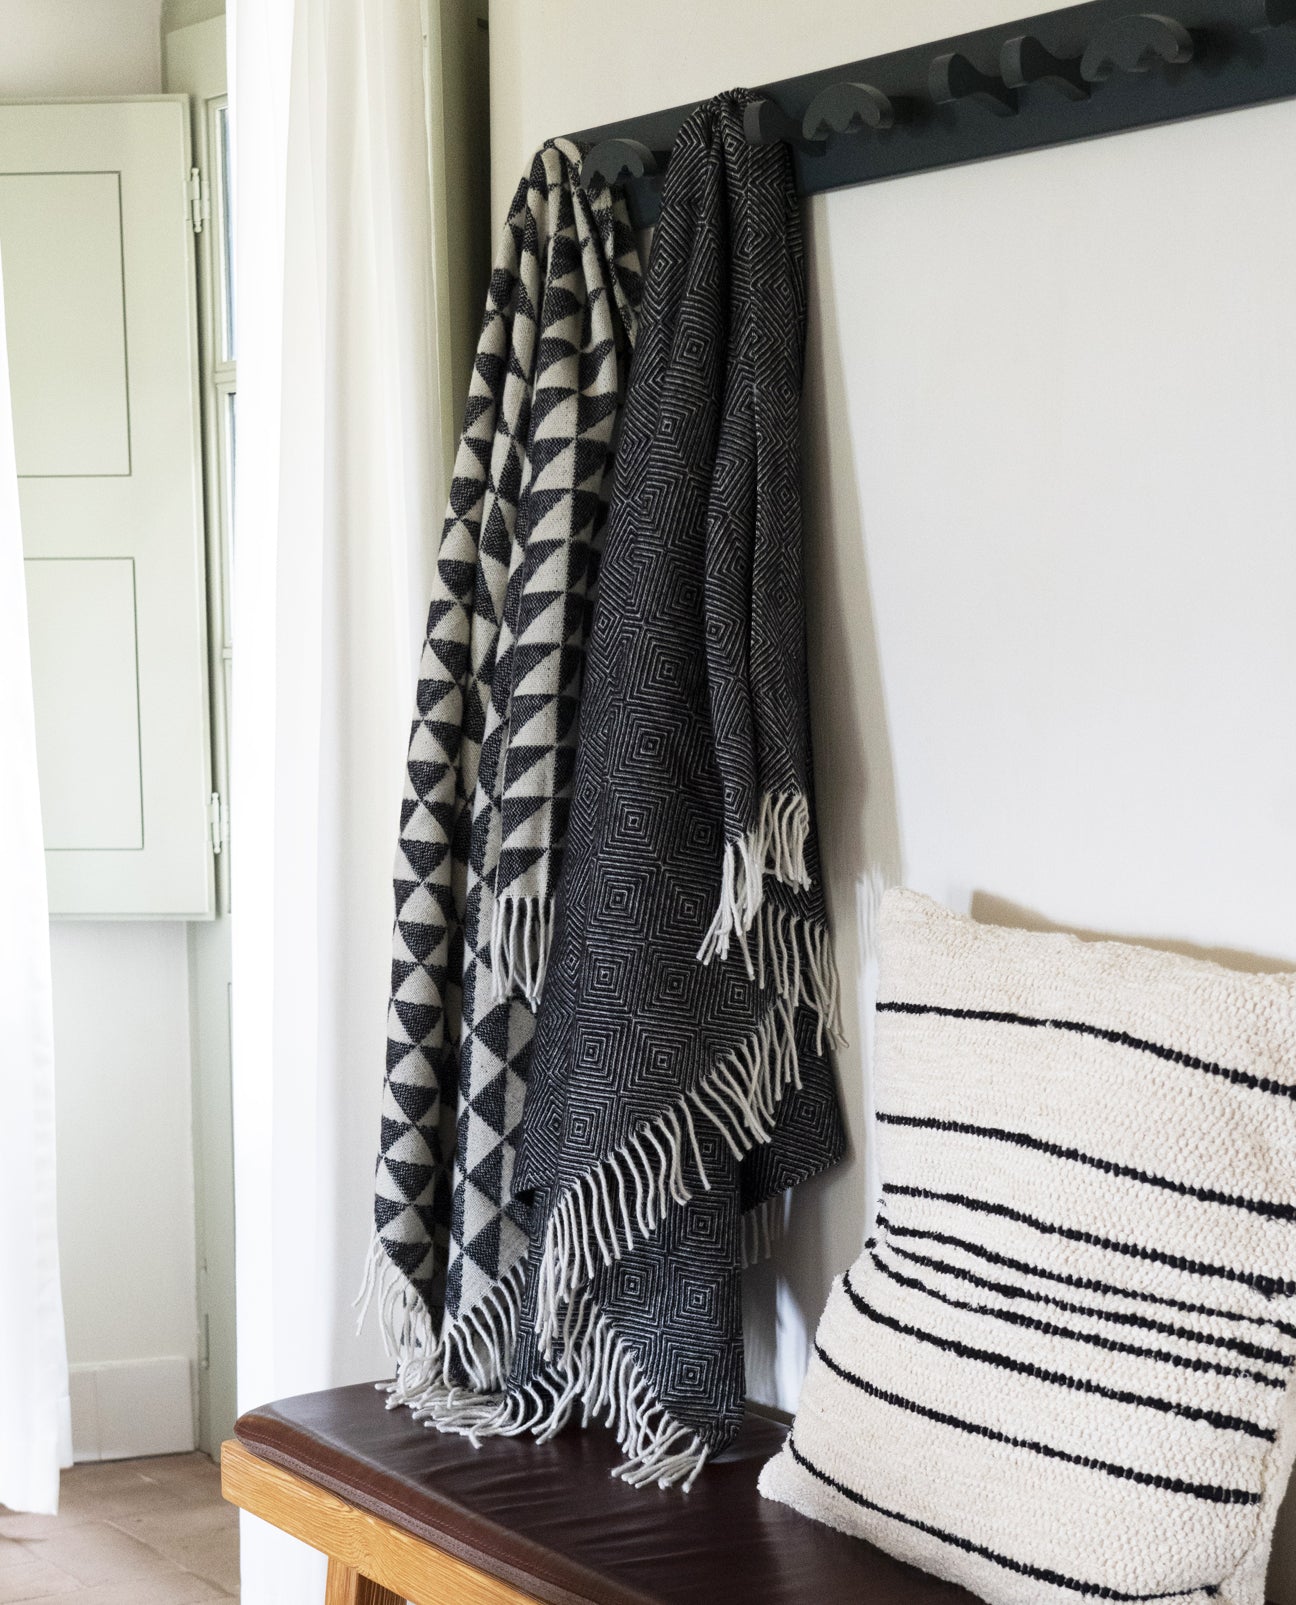 Corvo-Casa Wool Blanket in Black